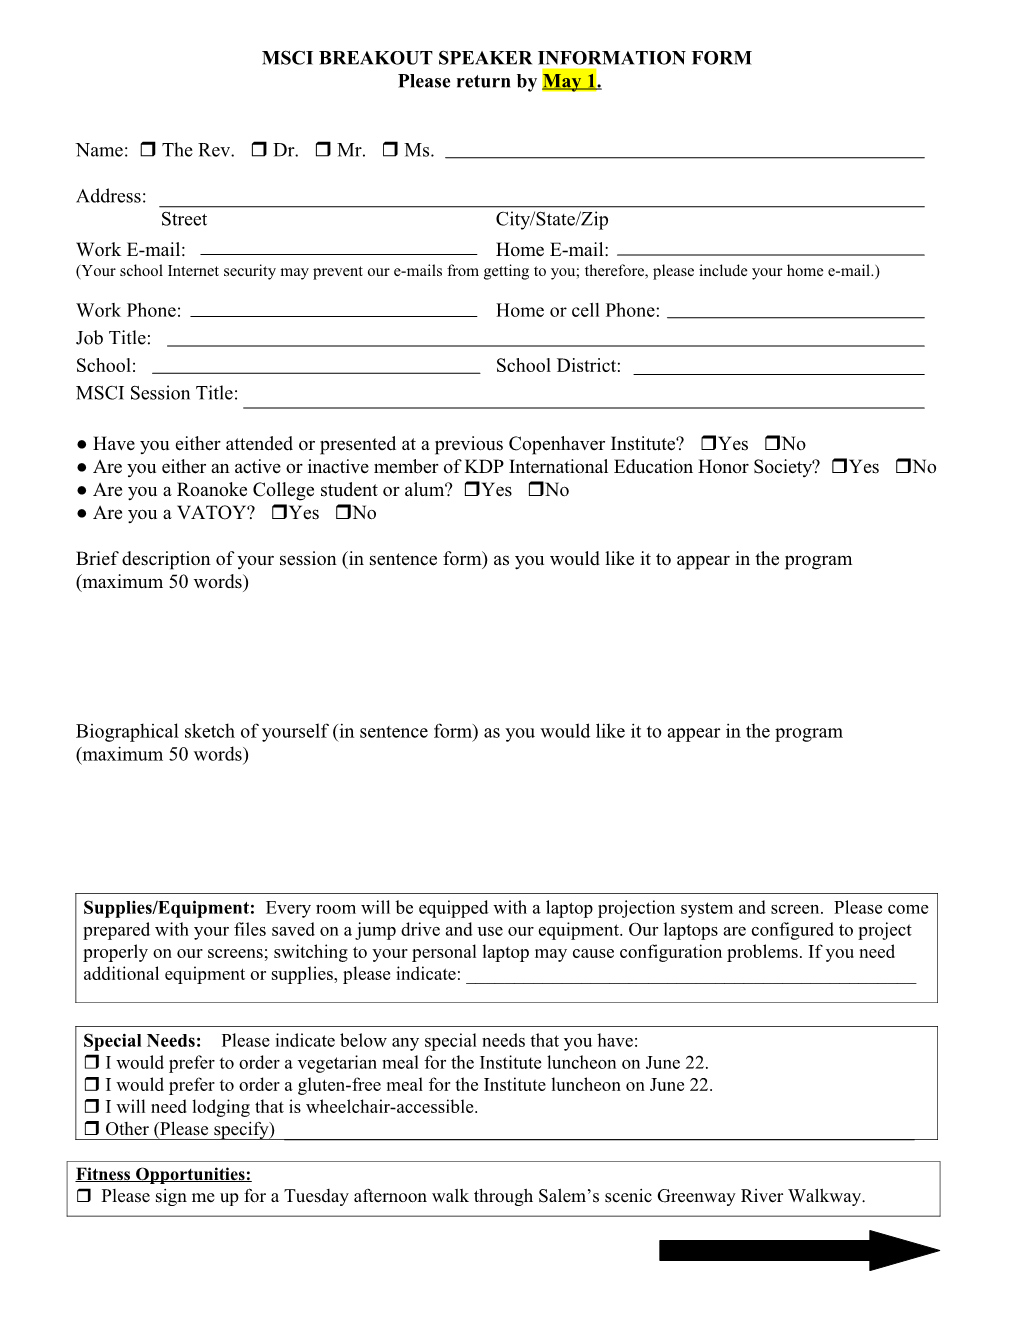 MSCI 2004 Breakout Speaker Participation Form